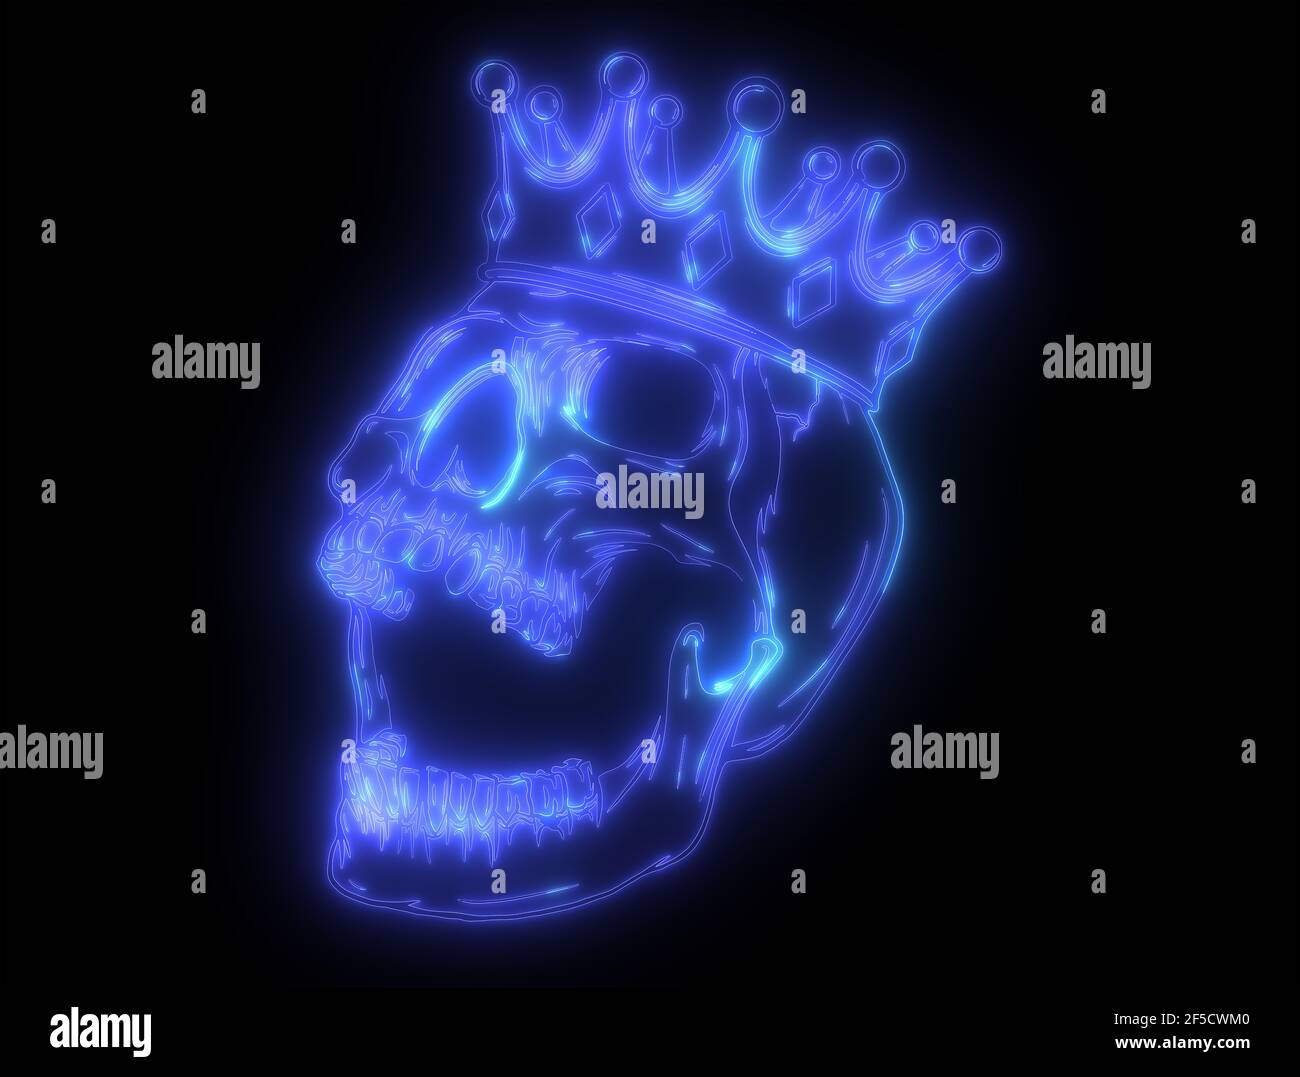 blue light neon king skull wearing crown Stock Photo